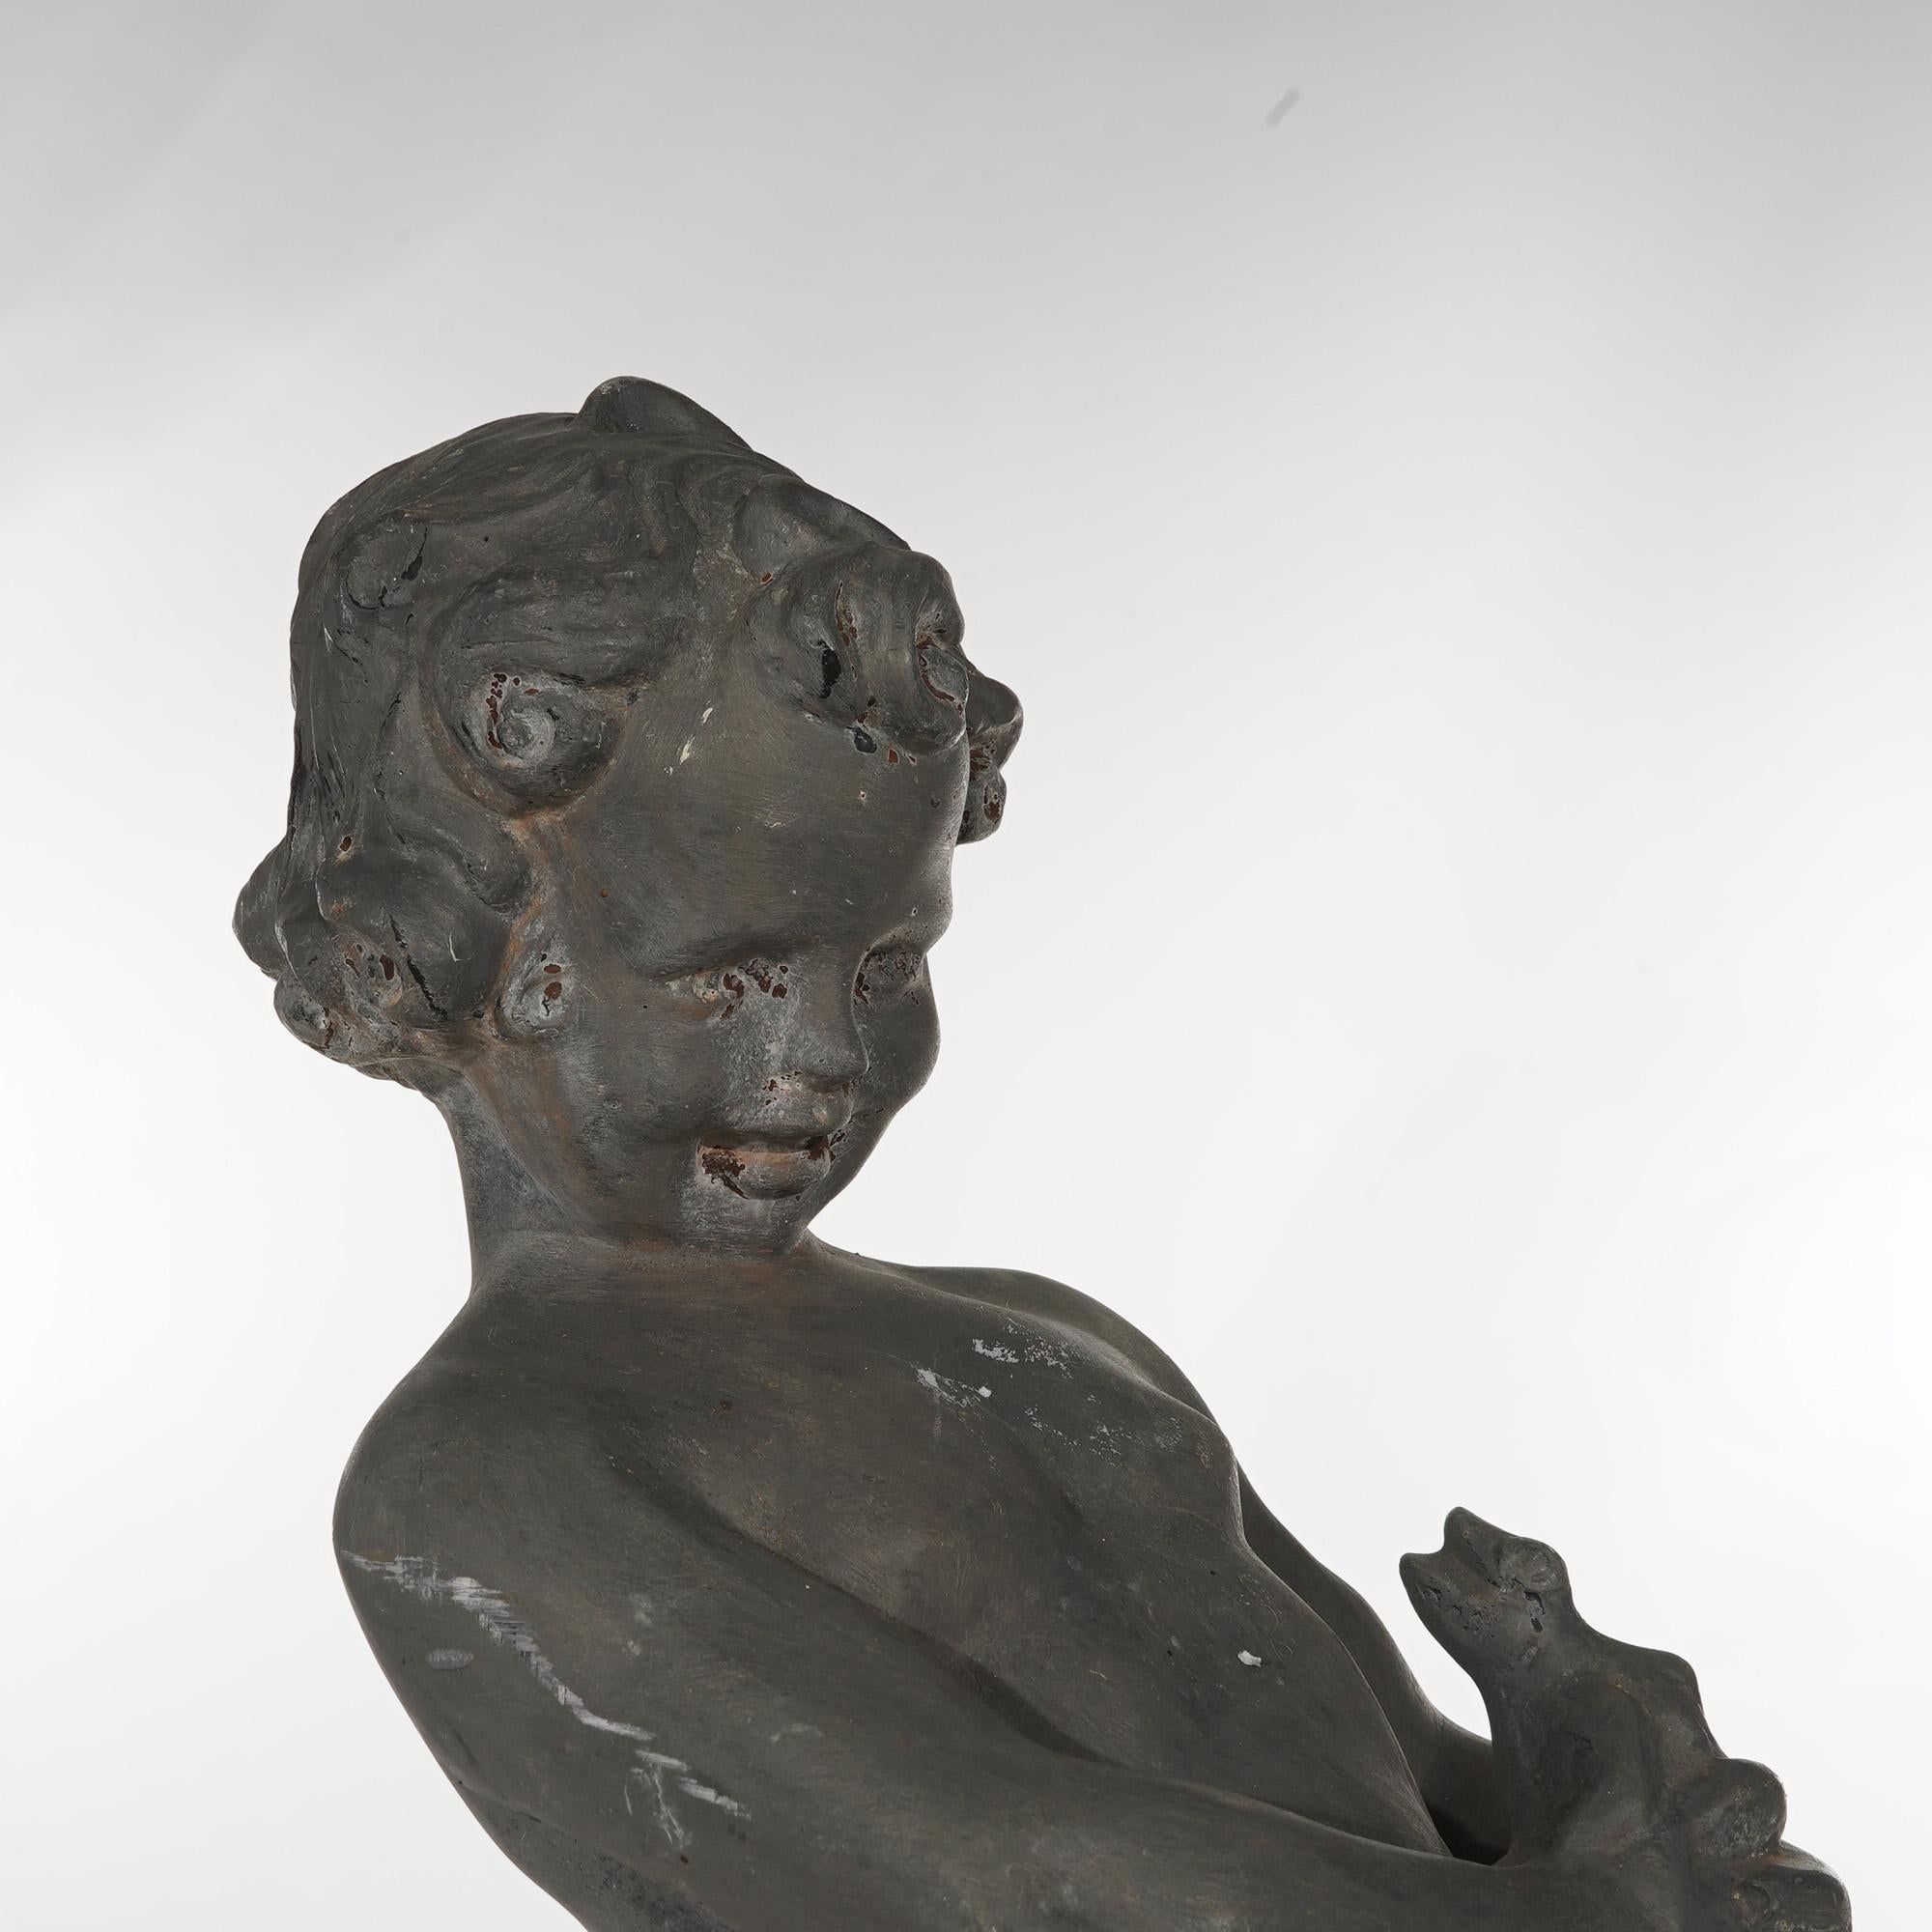 Antique Cast Iron Figural Cherub & Frog Garden Sculpture C1900

Measures - 36.5